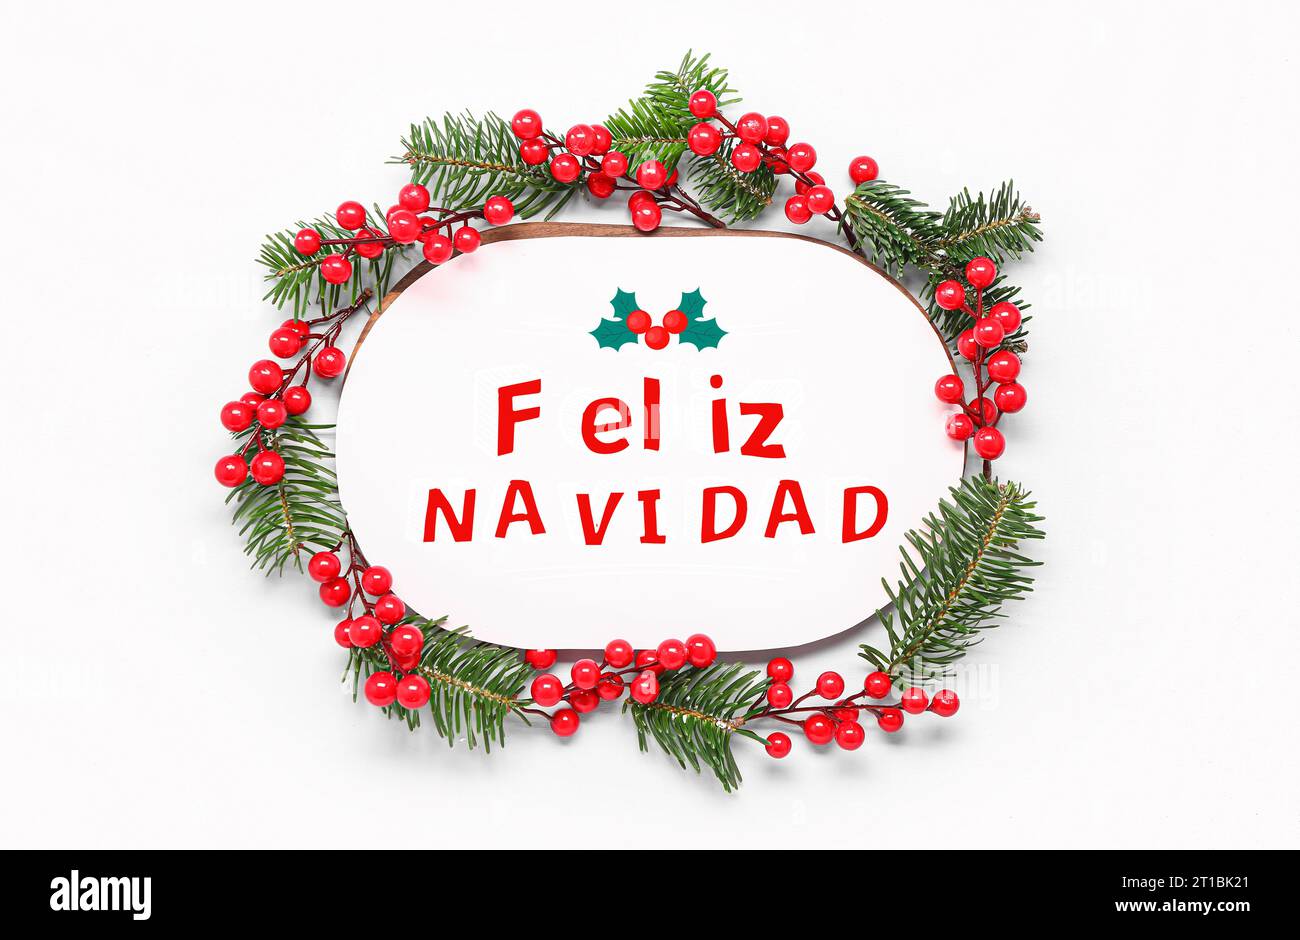 Greeting card with text FELIZ NAVIDAD (Spanish for Merry Christmas) Stock Photo